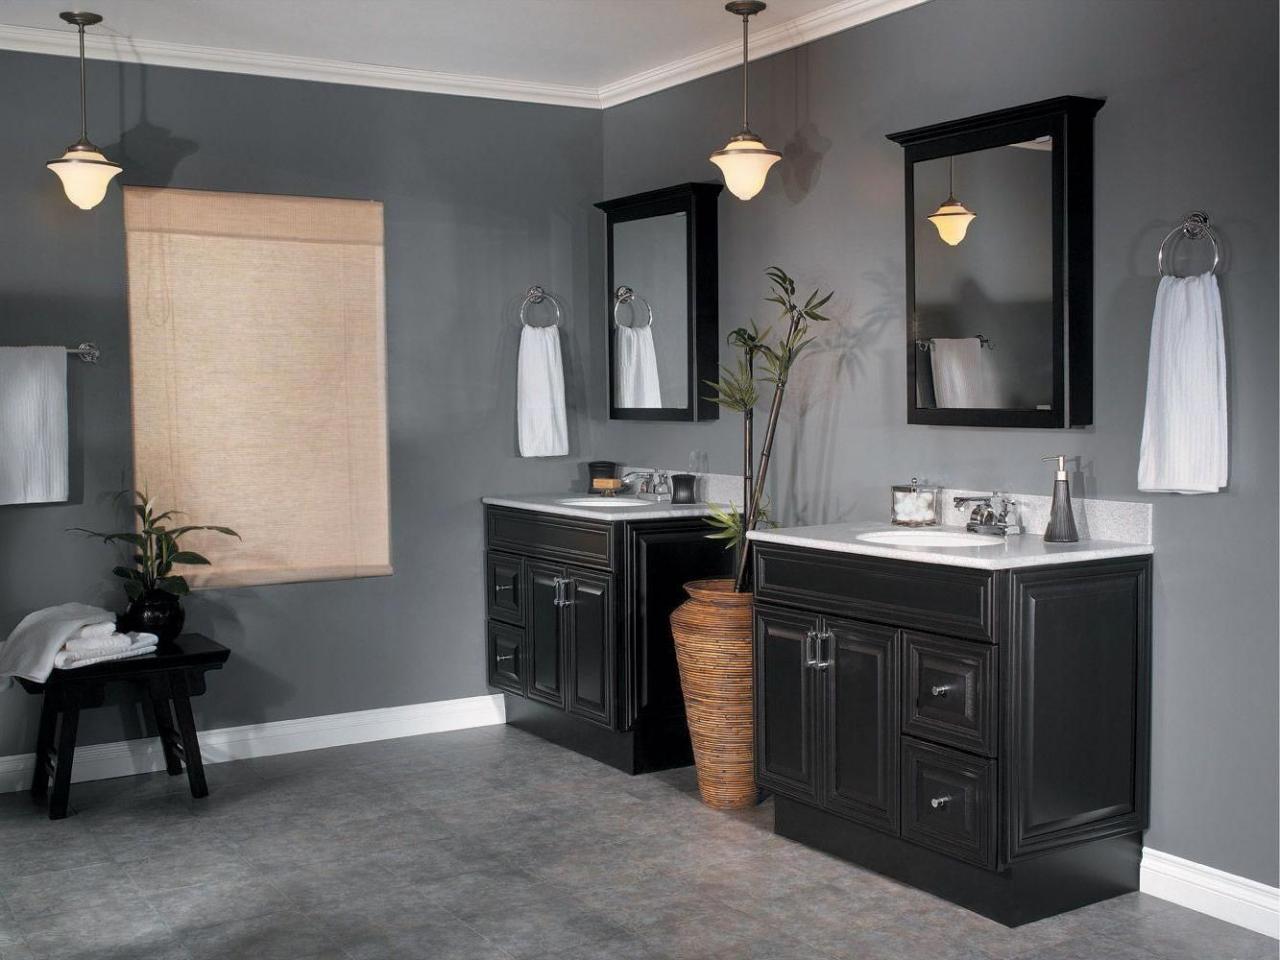 grey and black bathroom ideas pinkandblackbathroomsets Black